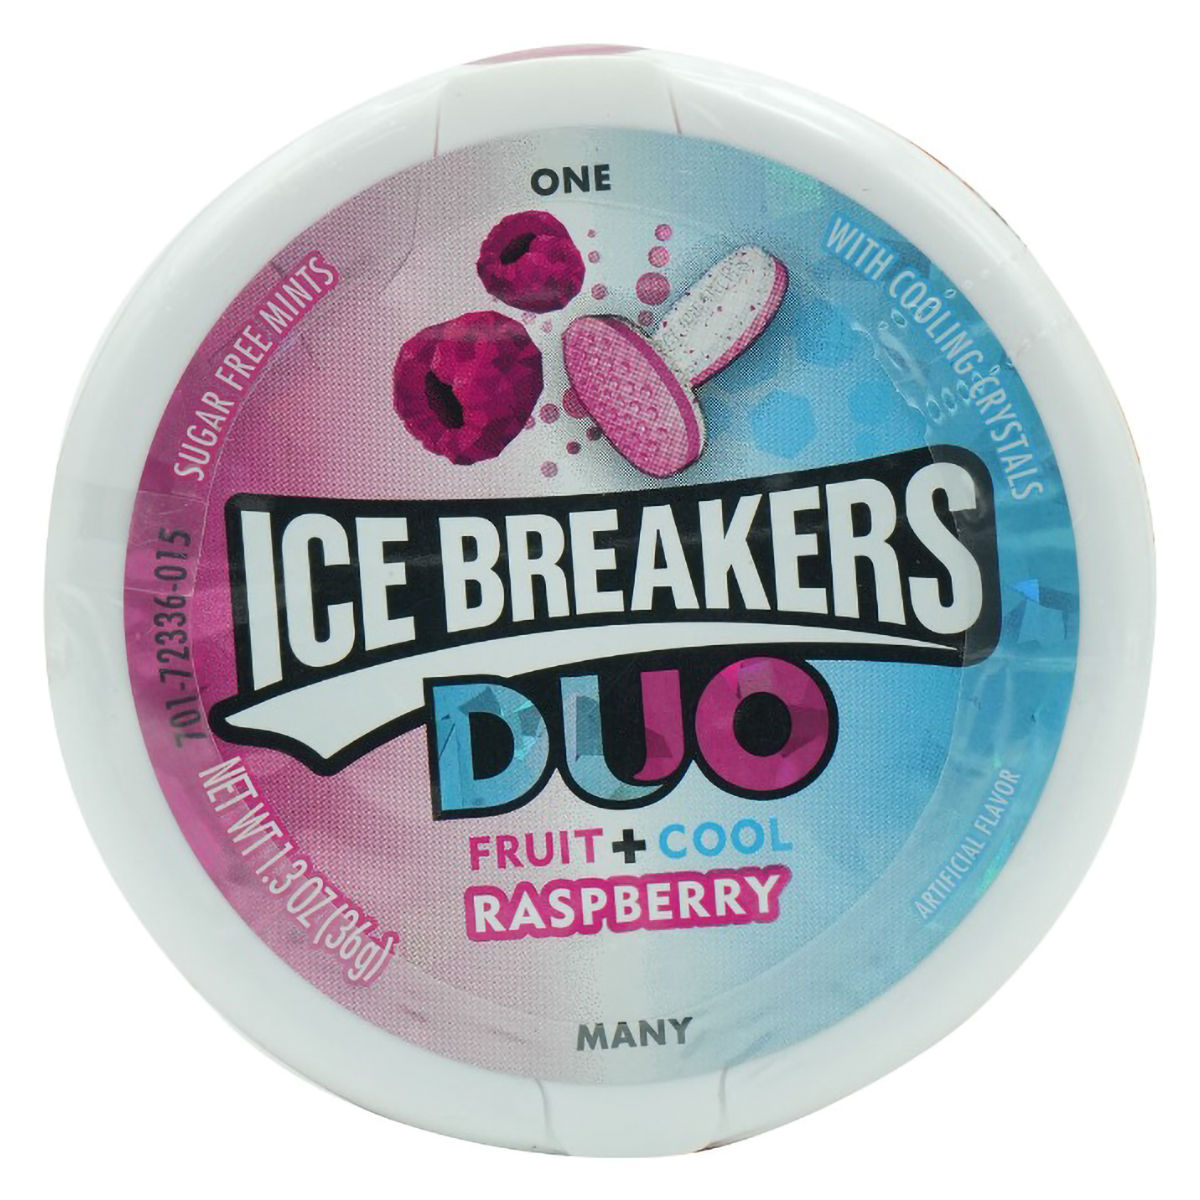 Buy Ice Breakers Duo Fruit + Cool Sugar FreeRaspberry Sugar Free Mouth Freshner Mints, 36 gm Online